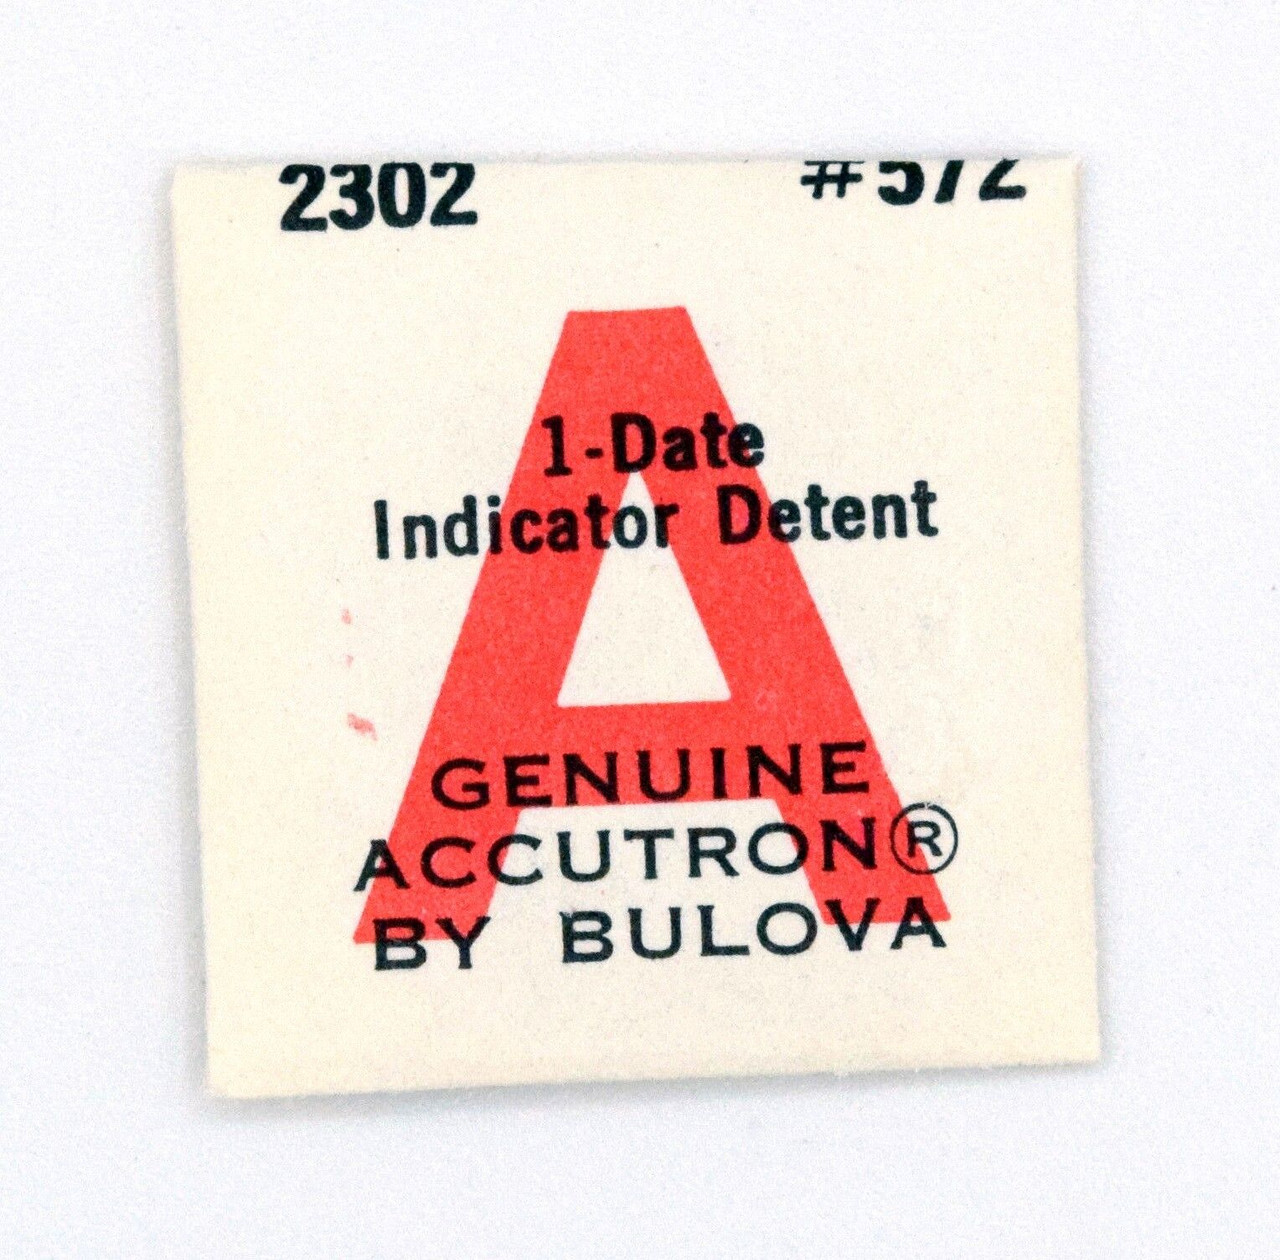 Bulova Accutron 2302 Date Indicator Detent Part #572